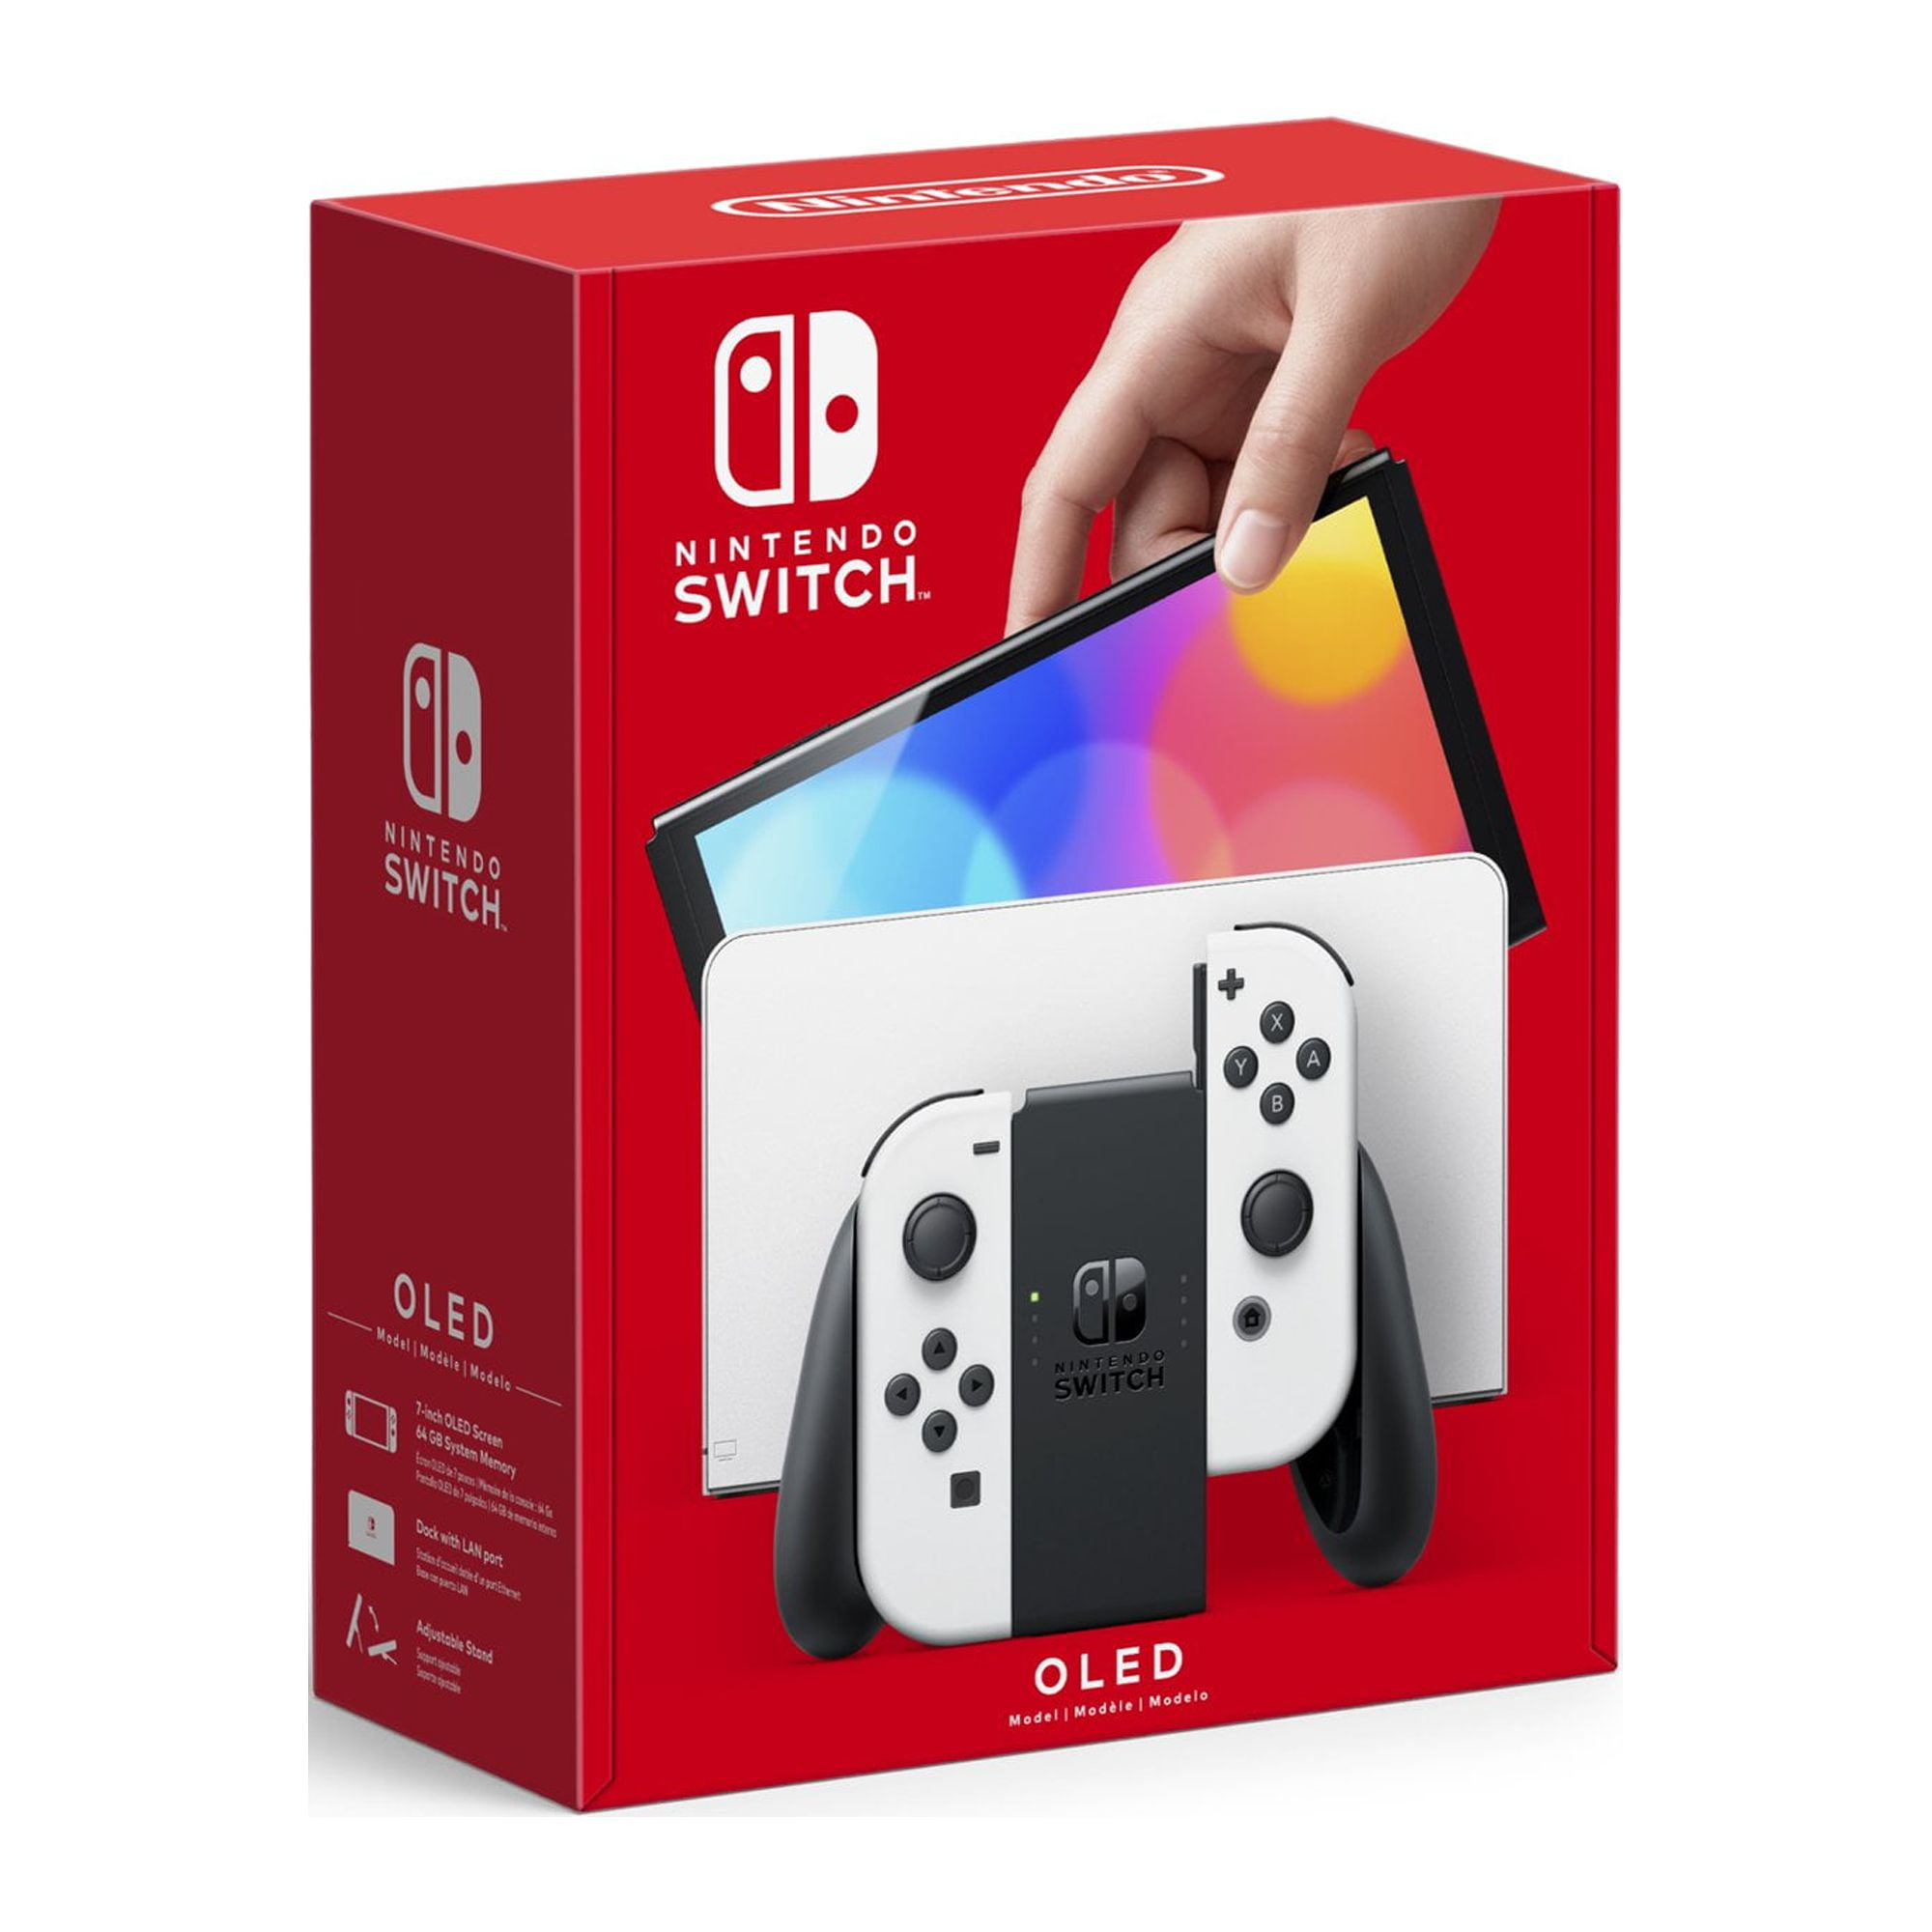 Nintendo -TEC Nintendo Switch (OLED Model) - 64 GB Internal